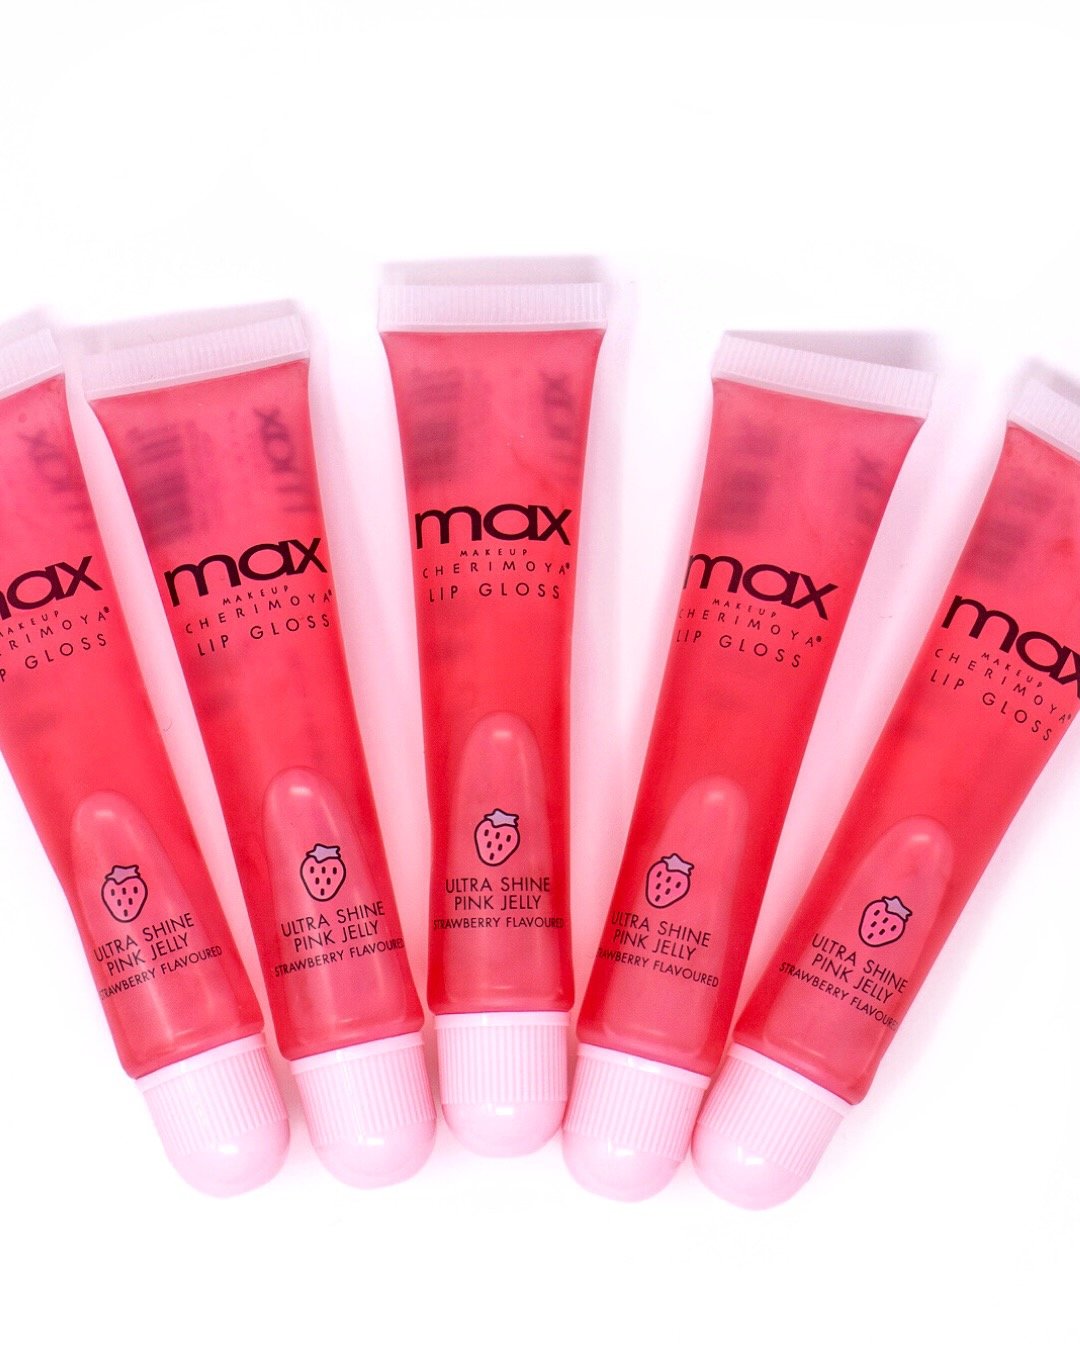 Max Makeup Cherimoya | Lip Gloss- Assorted Flavors